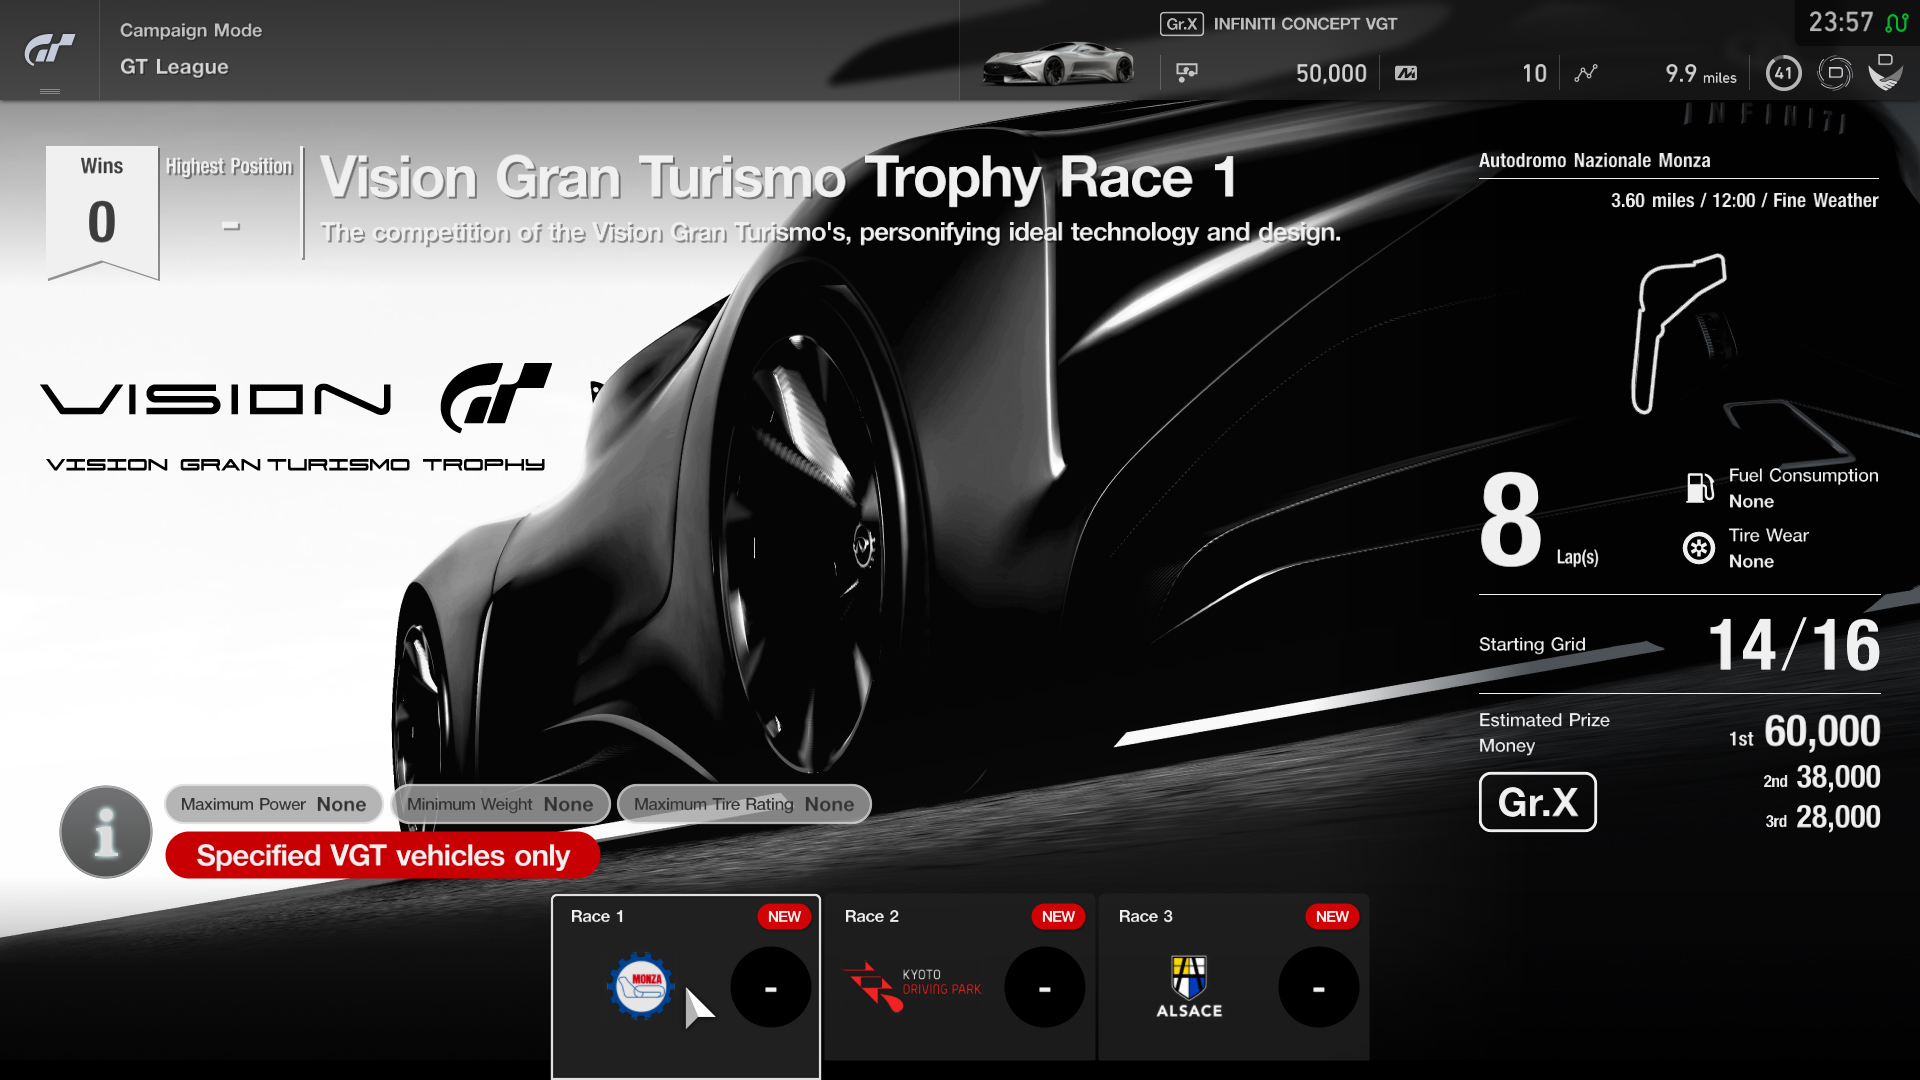 A Tribute To A 100% Gran Turismo 4 Speedrun Attempt